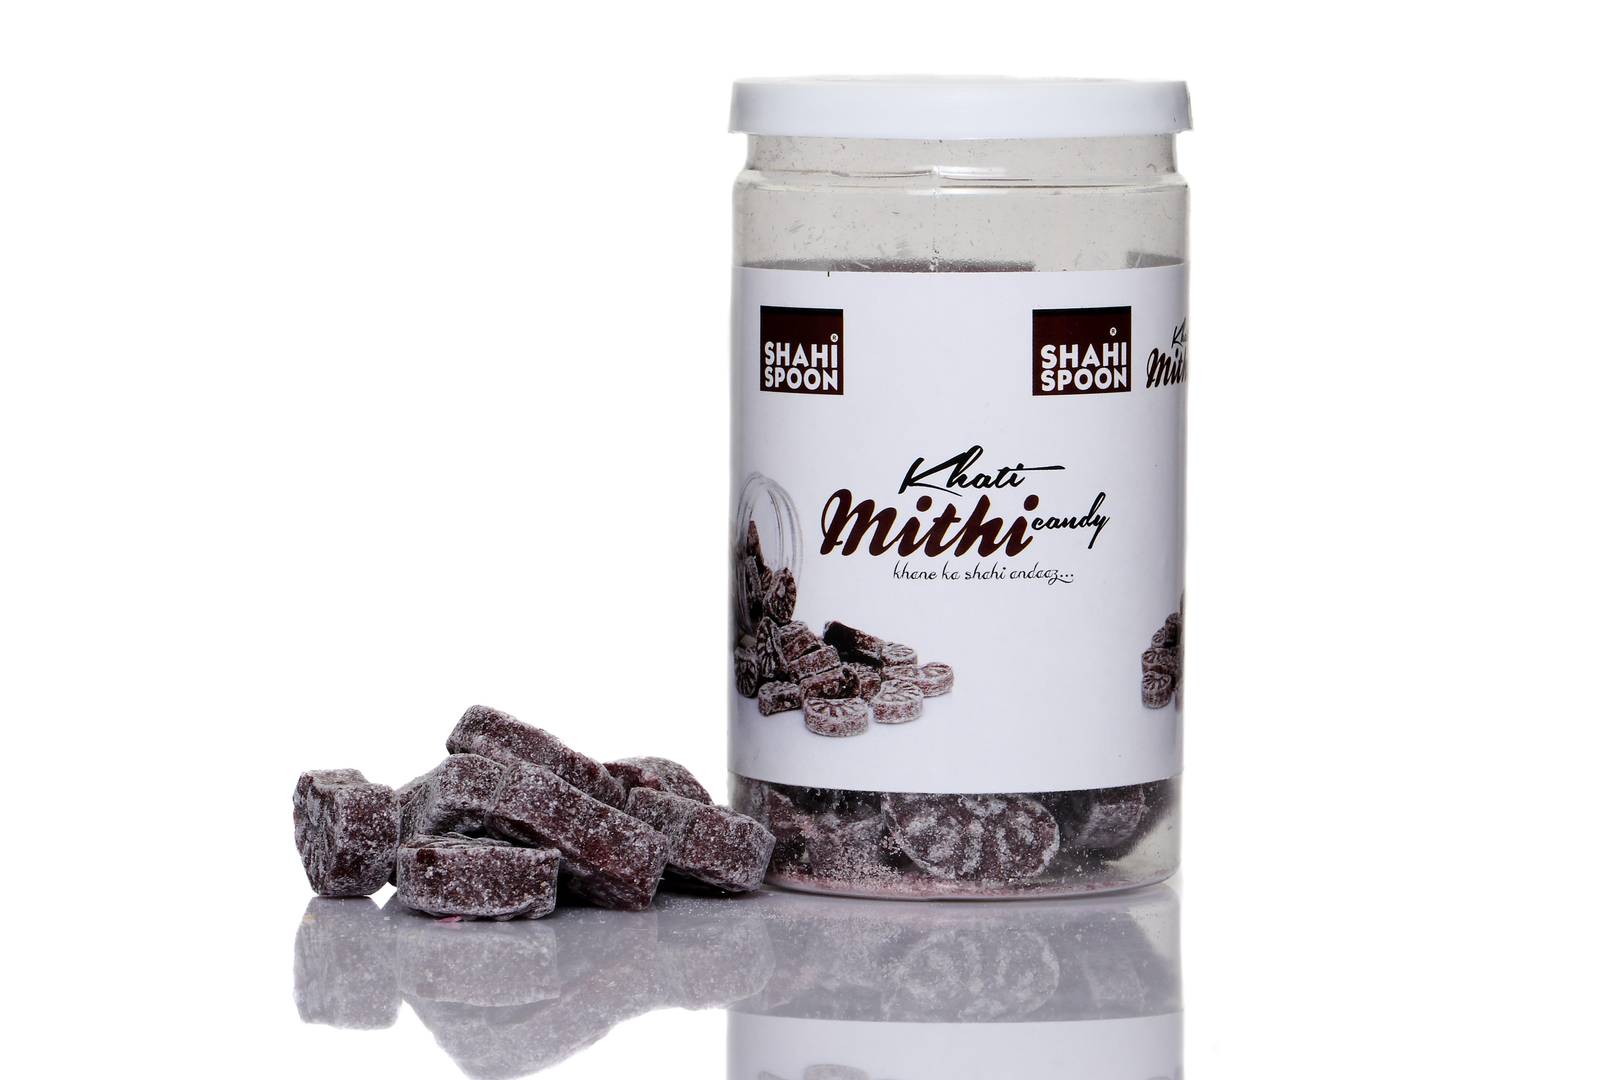 Shahi Spoon Khati Mithi Candy,135gm-Price Incl.Shipping